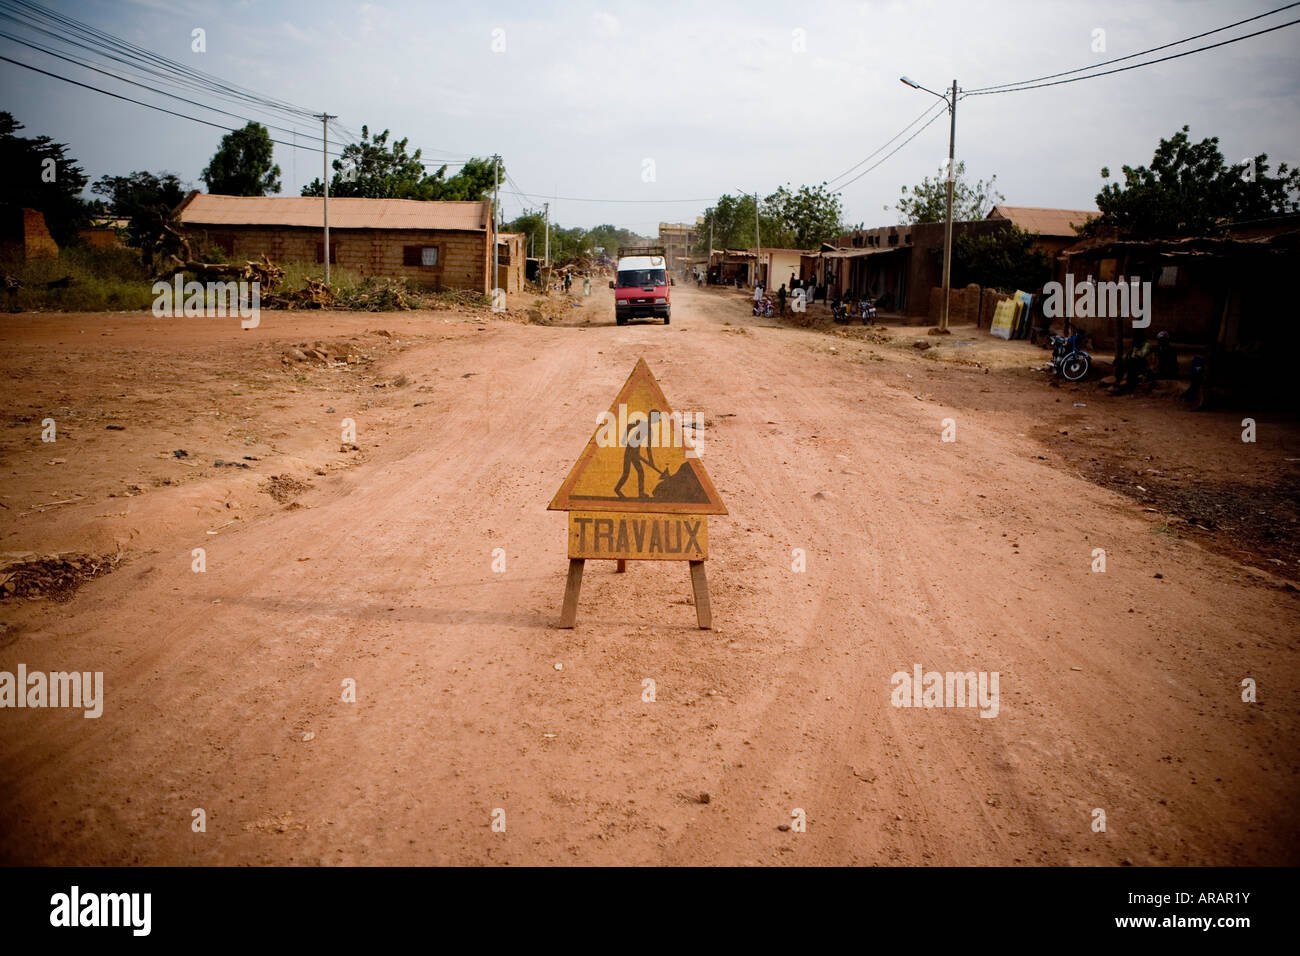 Cartello stradale in Mali, Africa Foto Stock